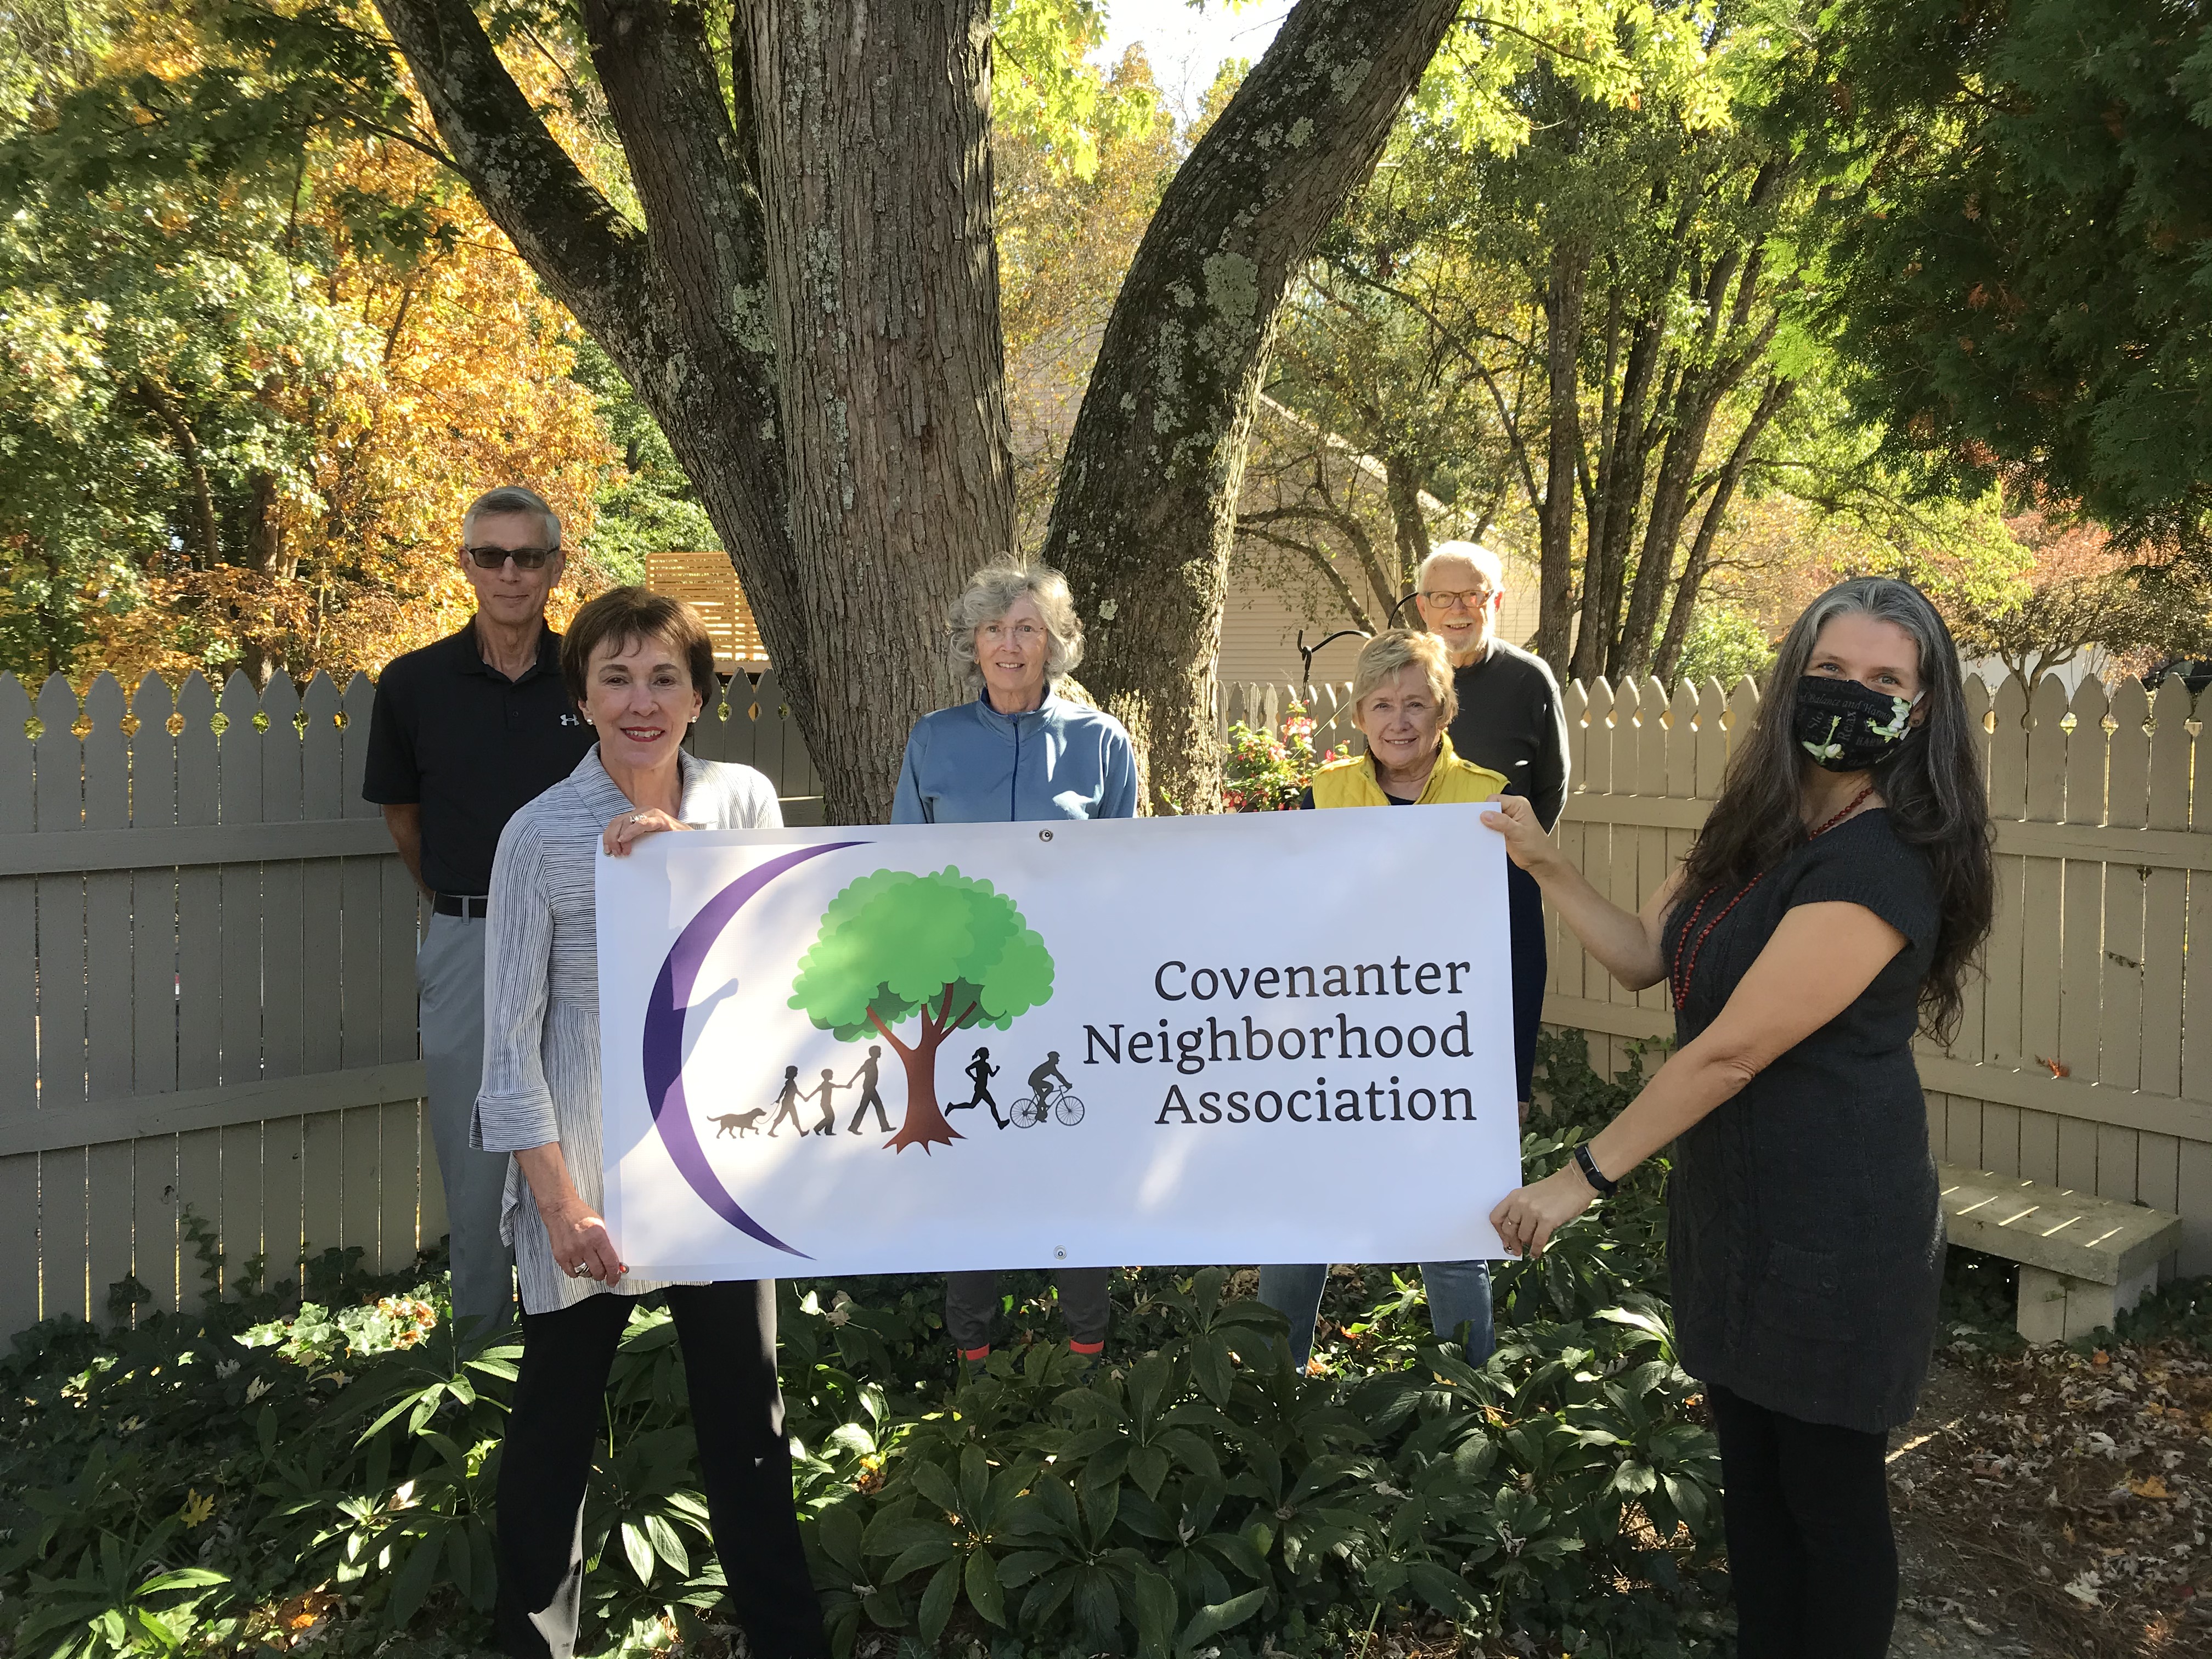 Covenanter neighbors hold a banner depicting their neighborhood association logo